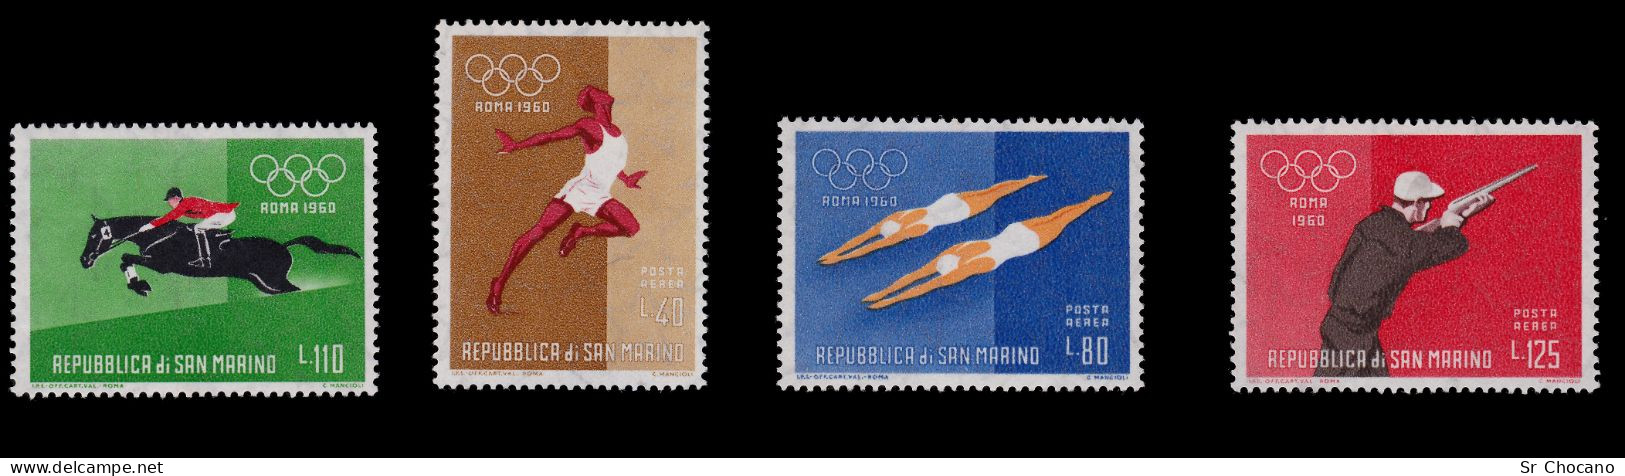 SAN MARINO STAMPS.1960.17th Olympic Games Rome.SCOTT 456-465,C111-C114.MNH. - Ungebraucht